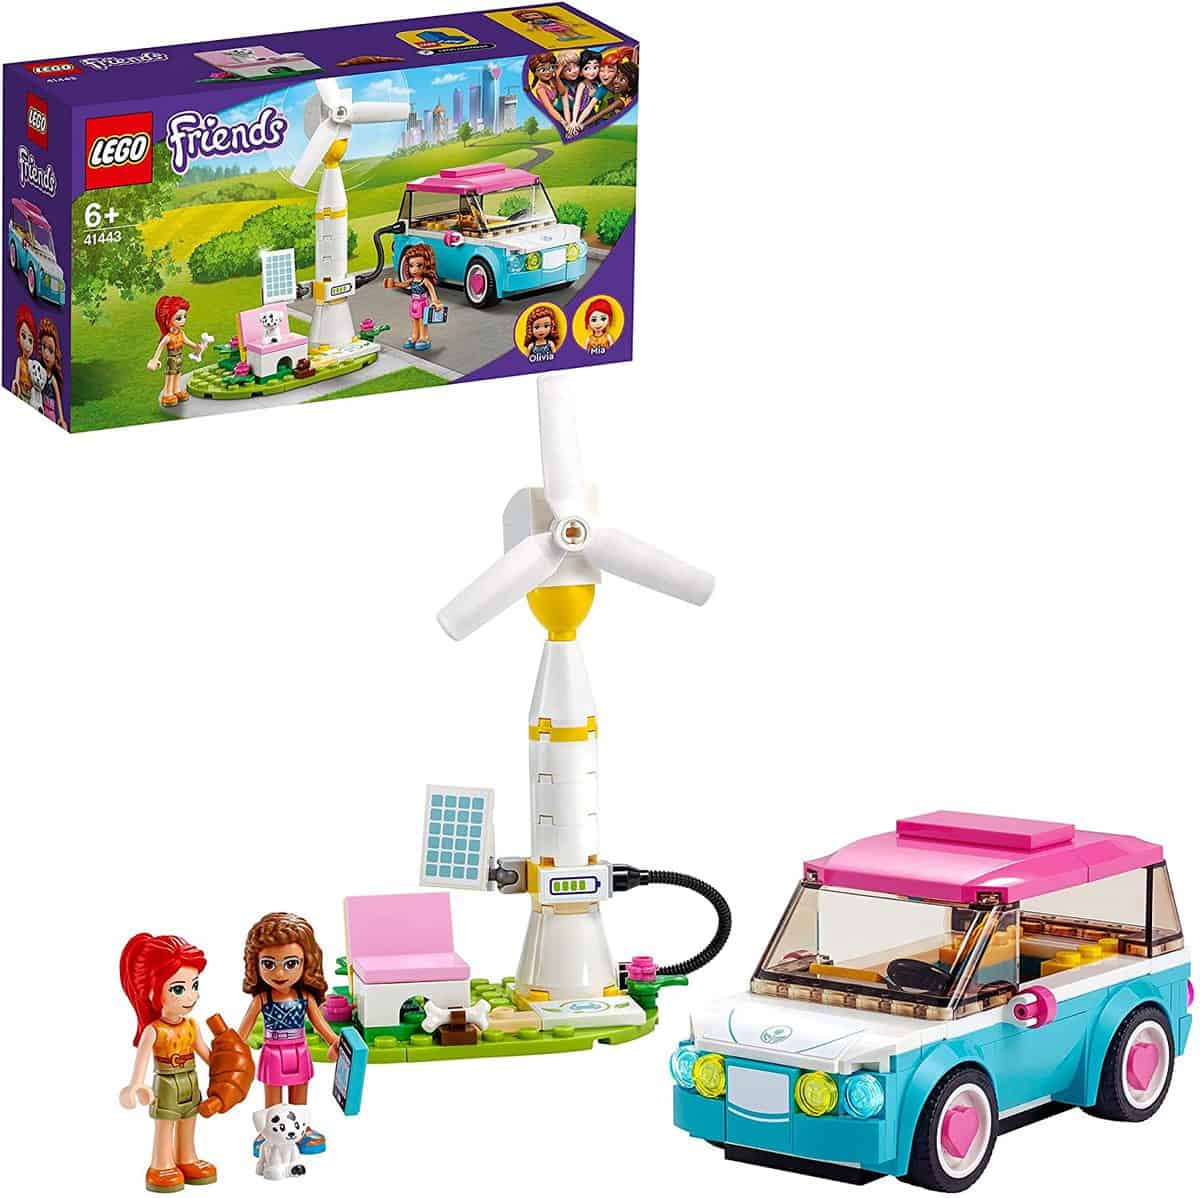 LEGO Friends - Olivias Elektroauto (41443) - für 7,07 € [Prime] statt 9,99 €